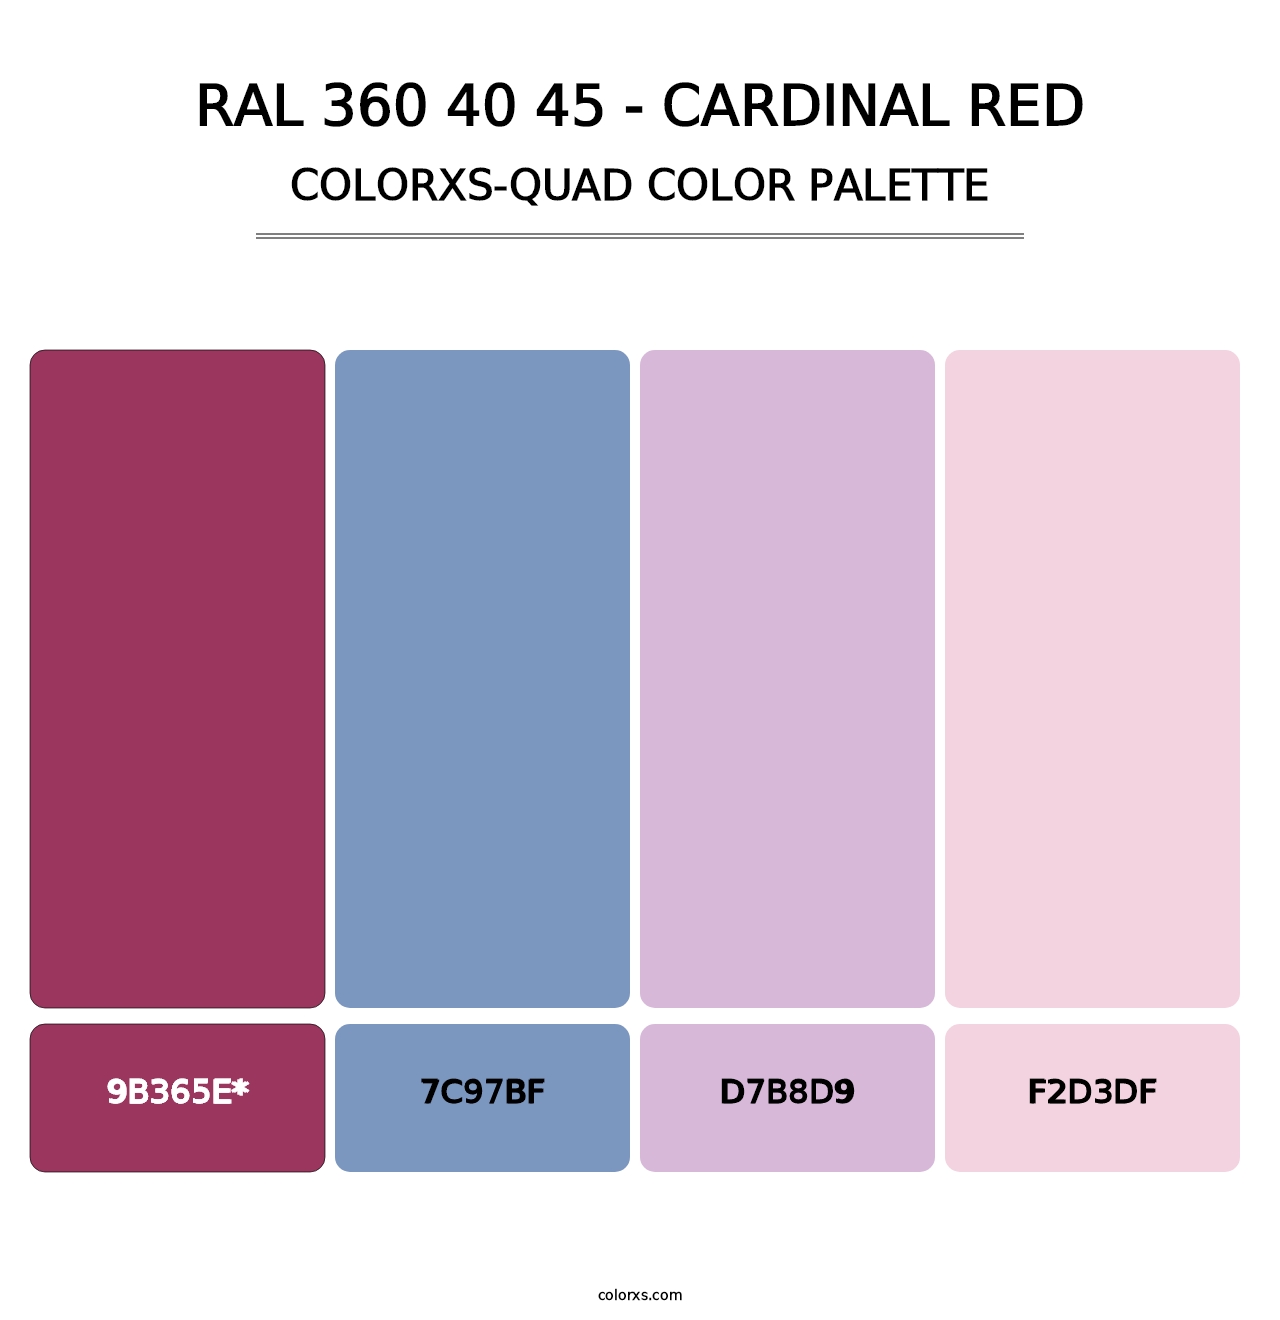 RAL 360 40 45 - Cardinal Red - Colorxs Quad Palette